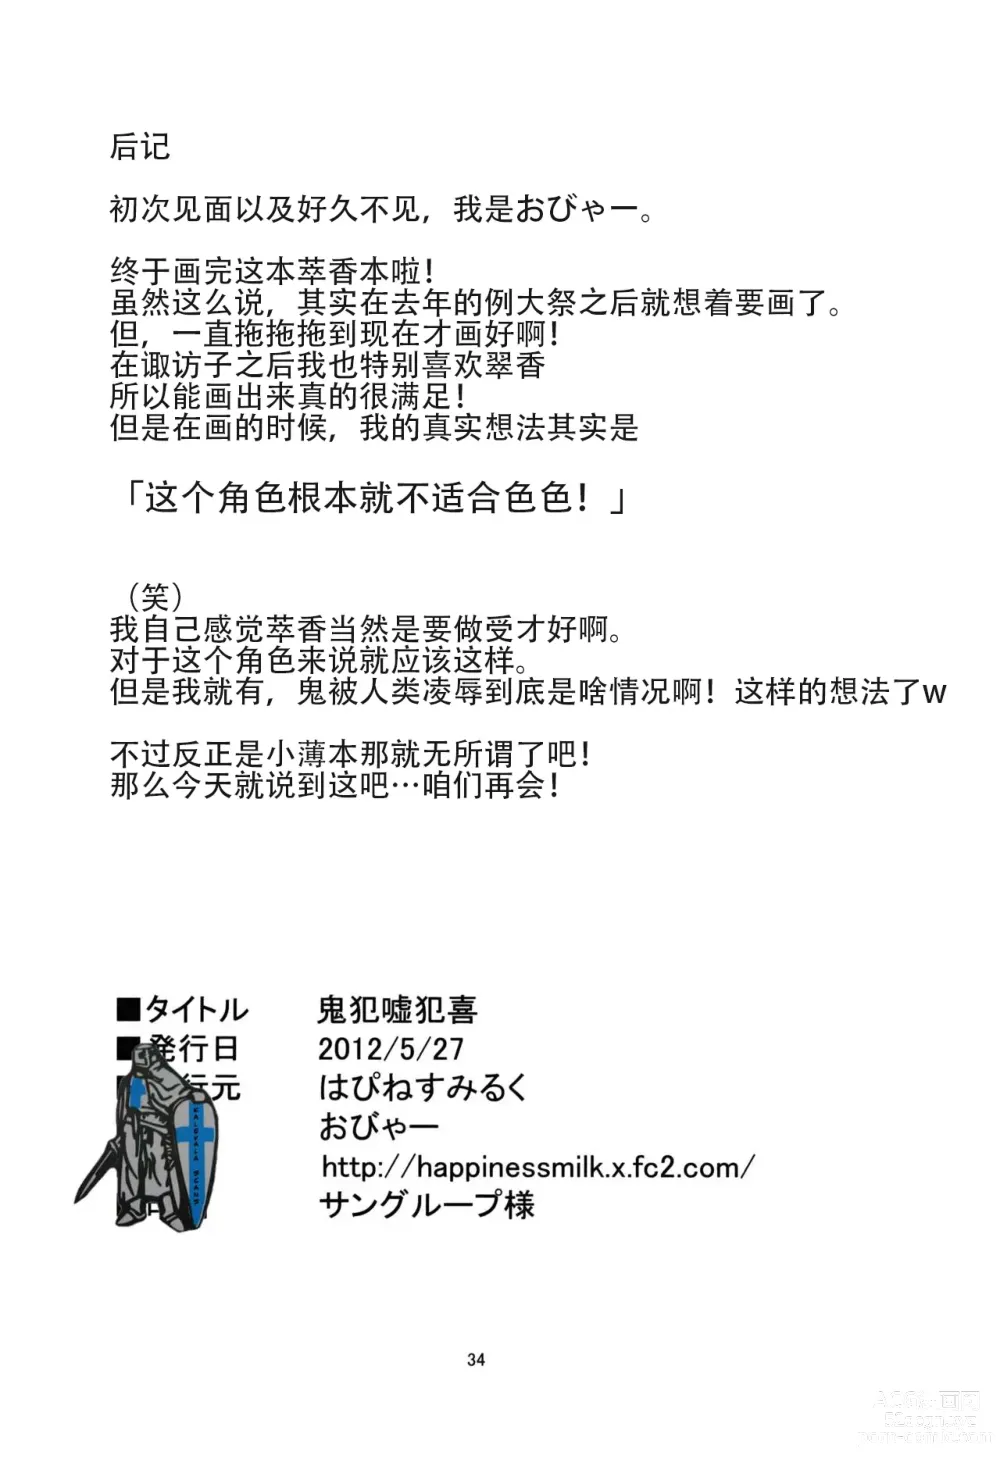 Page 34 of doujinshi Oni Hankyo Hanki